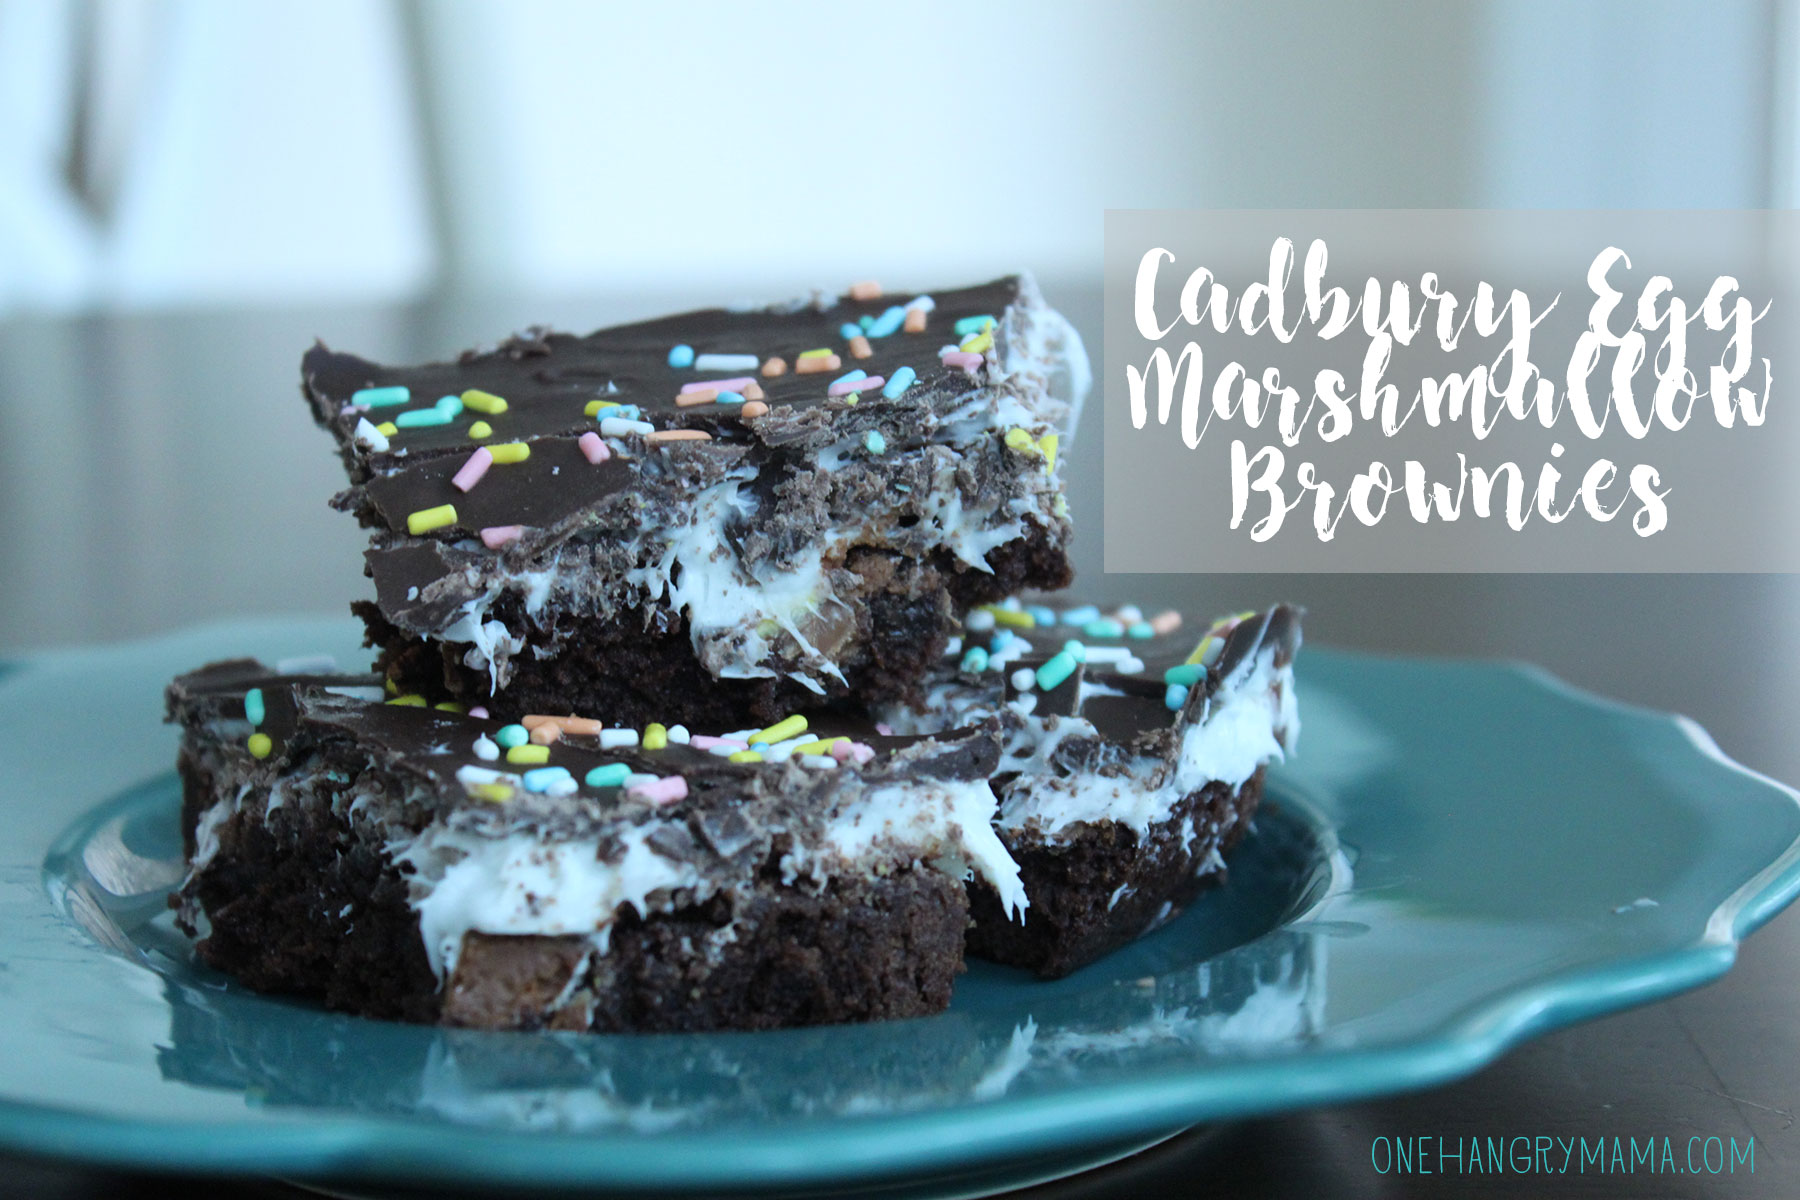 Cadbury Egg Marshmallow Brownies | One Hangry Mama